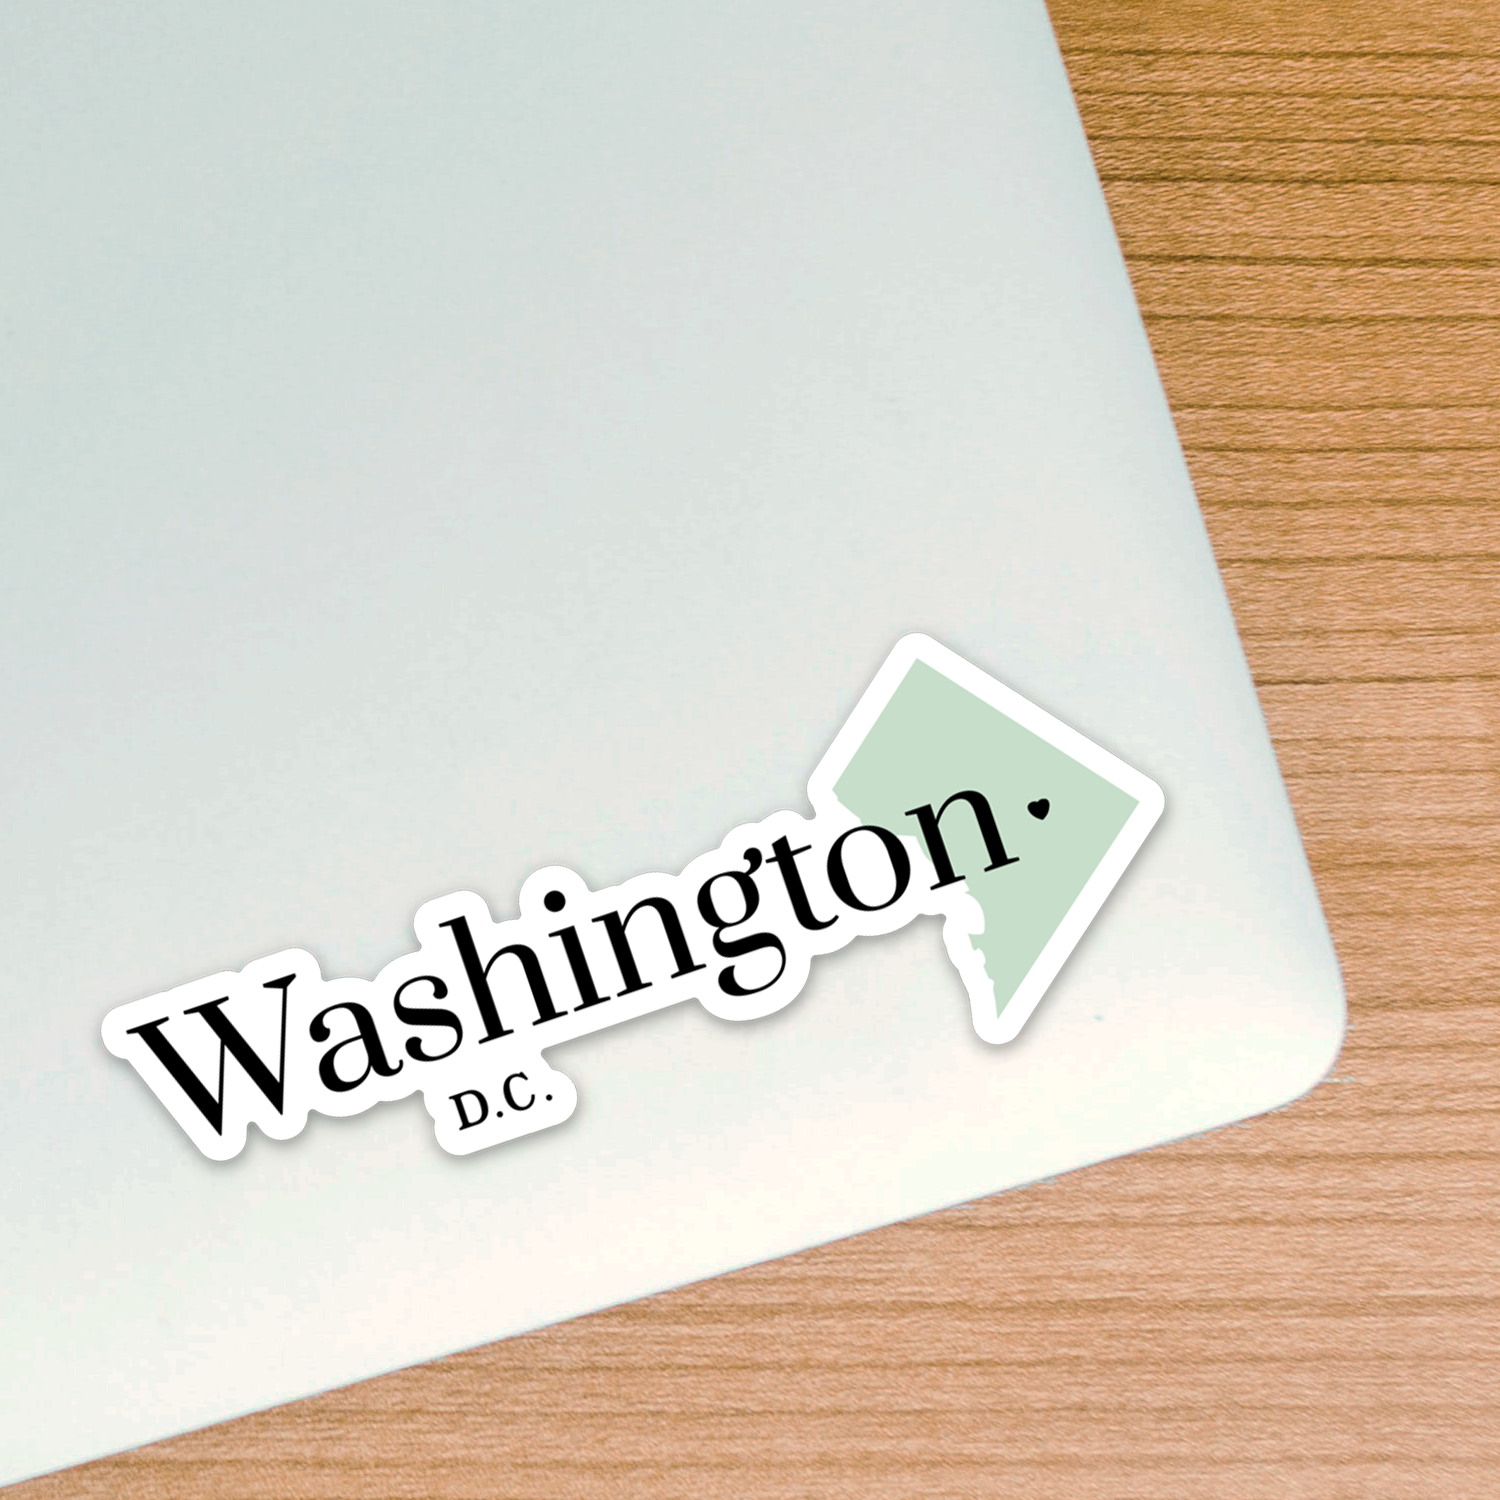 Washington, DC Sticker